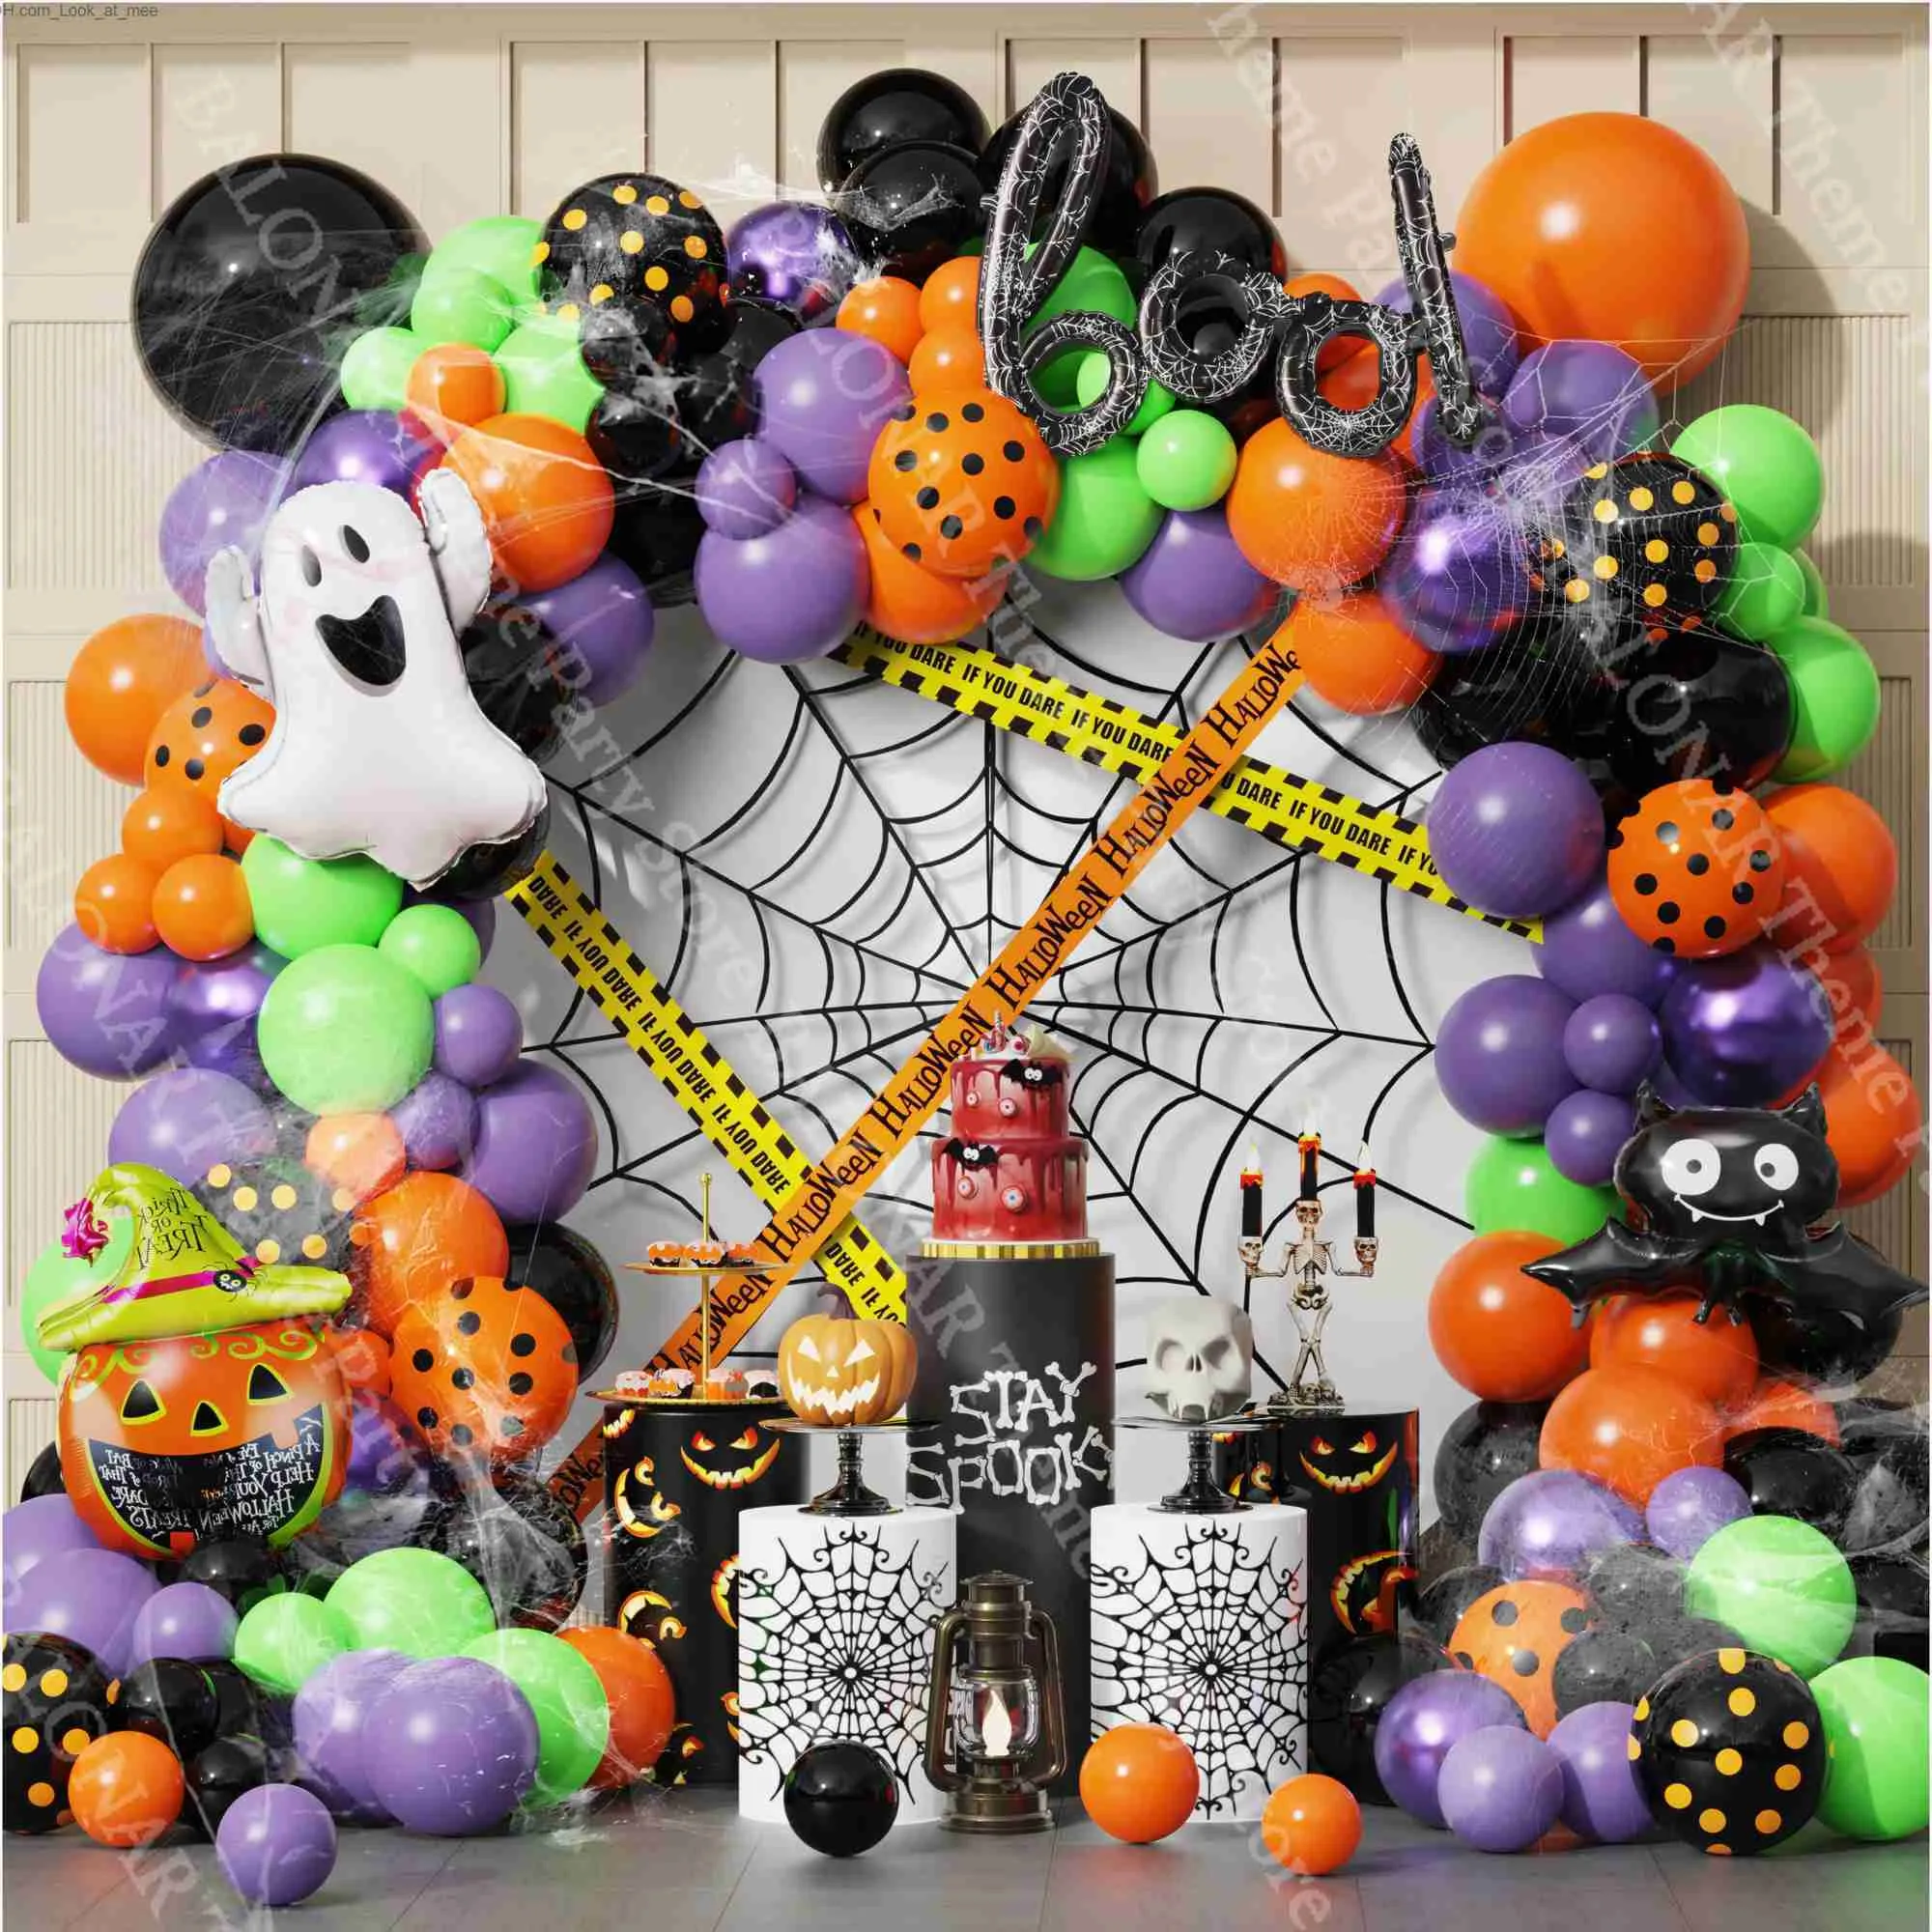 Andere evenementenfeestjes 103PCS Halloween -thema Orange Black Polka Dot Latex Pompoen Bat Ghost Foil Balloon Garland Arch Kit voor horrorfeestdecoratie Q231010